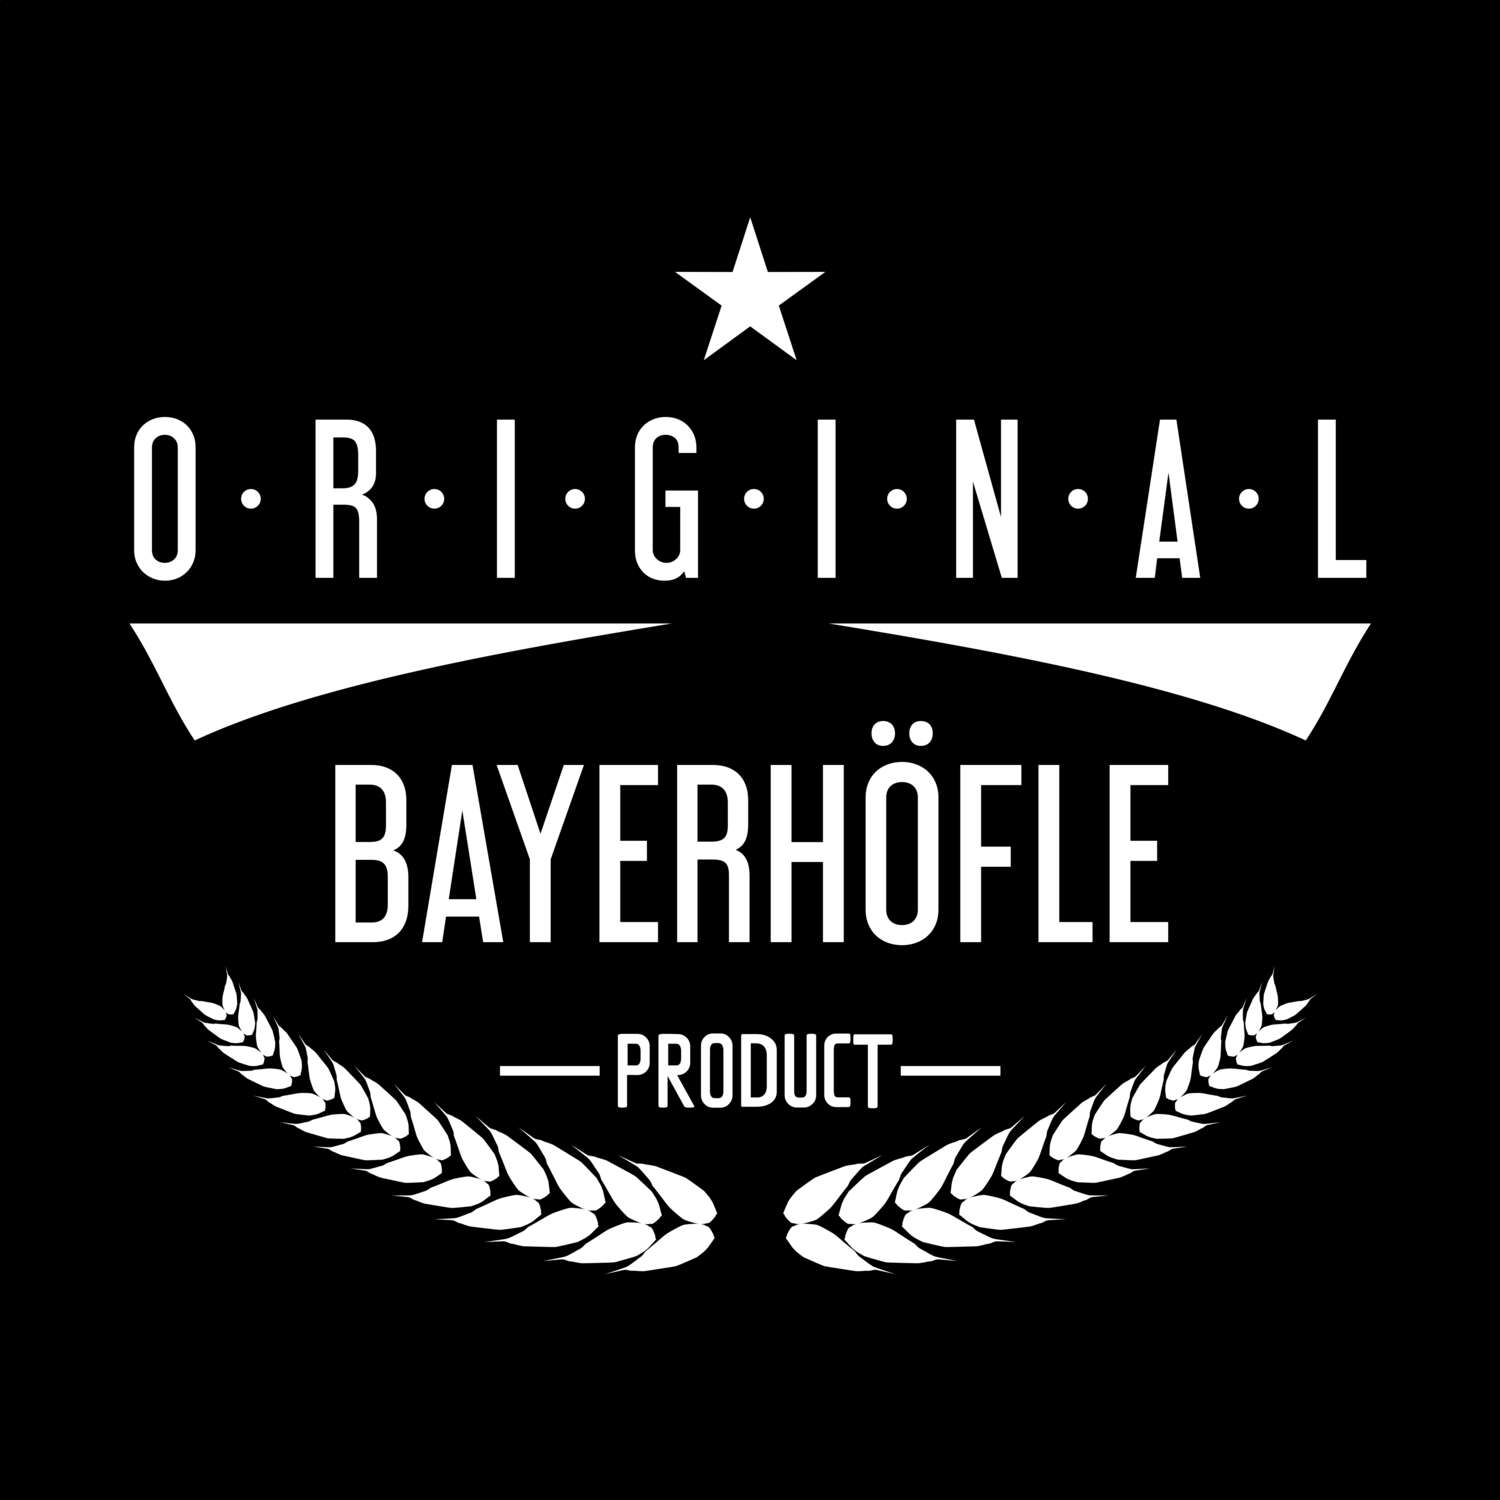 Bayerhöfle T-Shirt »Original Product«